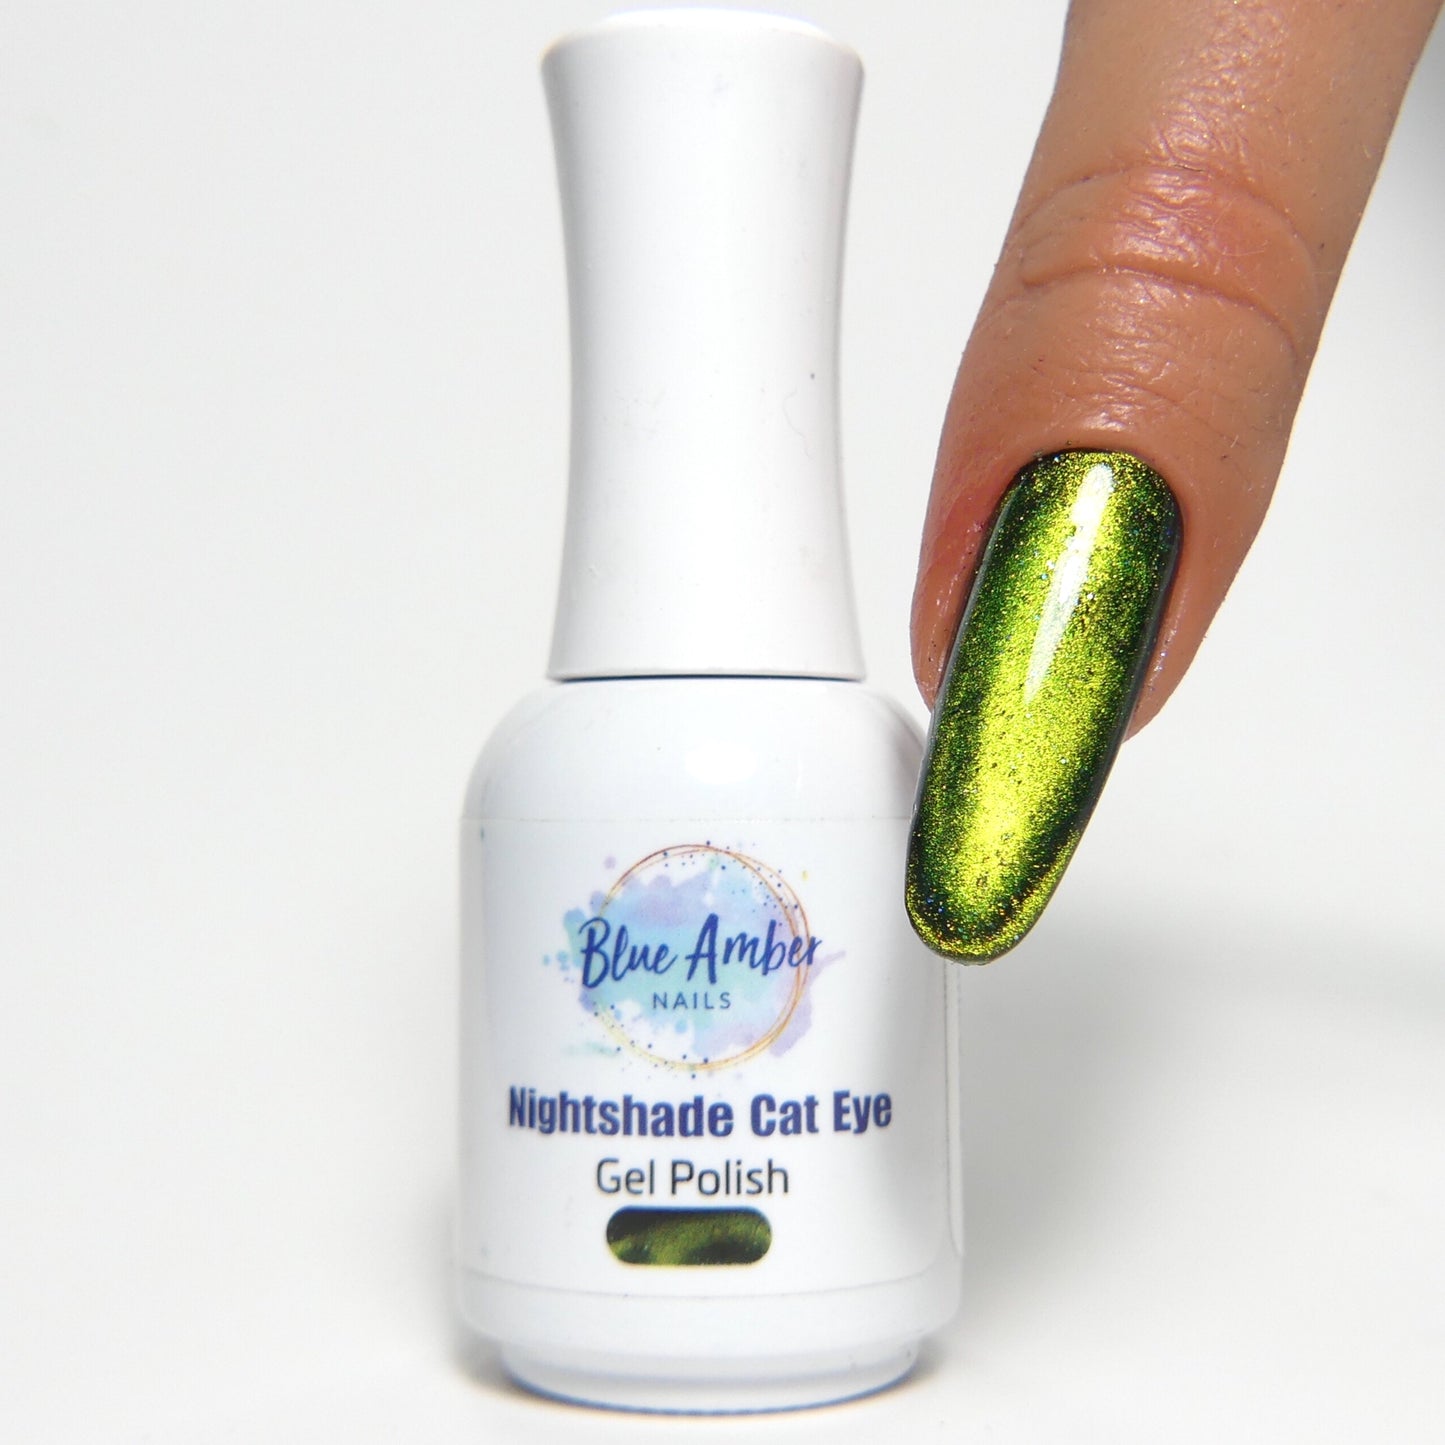 Nightshade Cat Eye Bundle - 4 Magnetic Gel Polishes